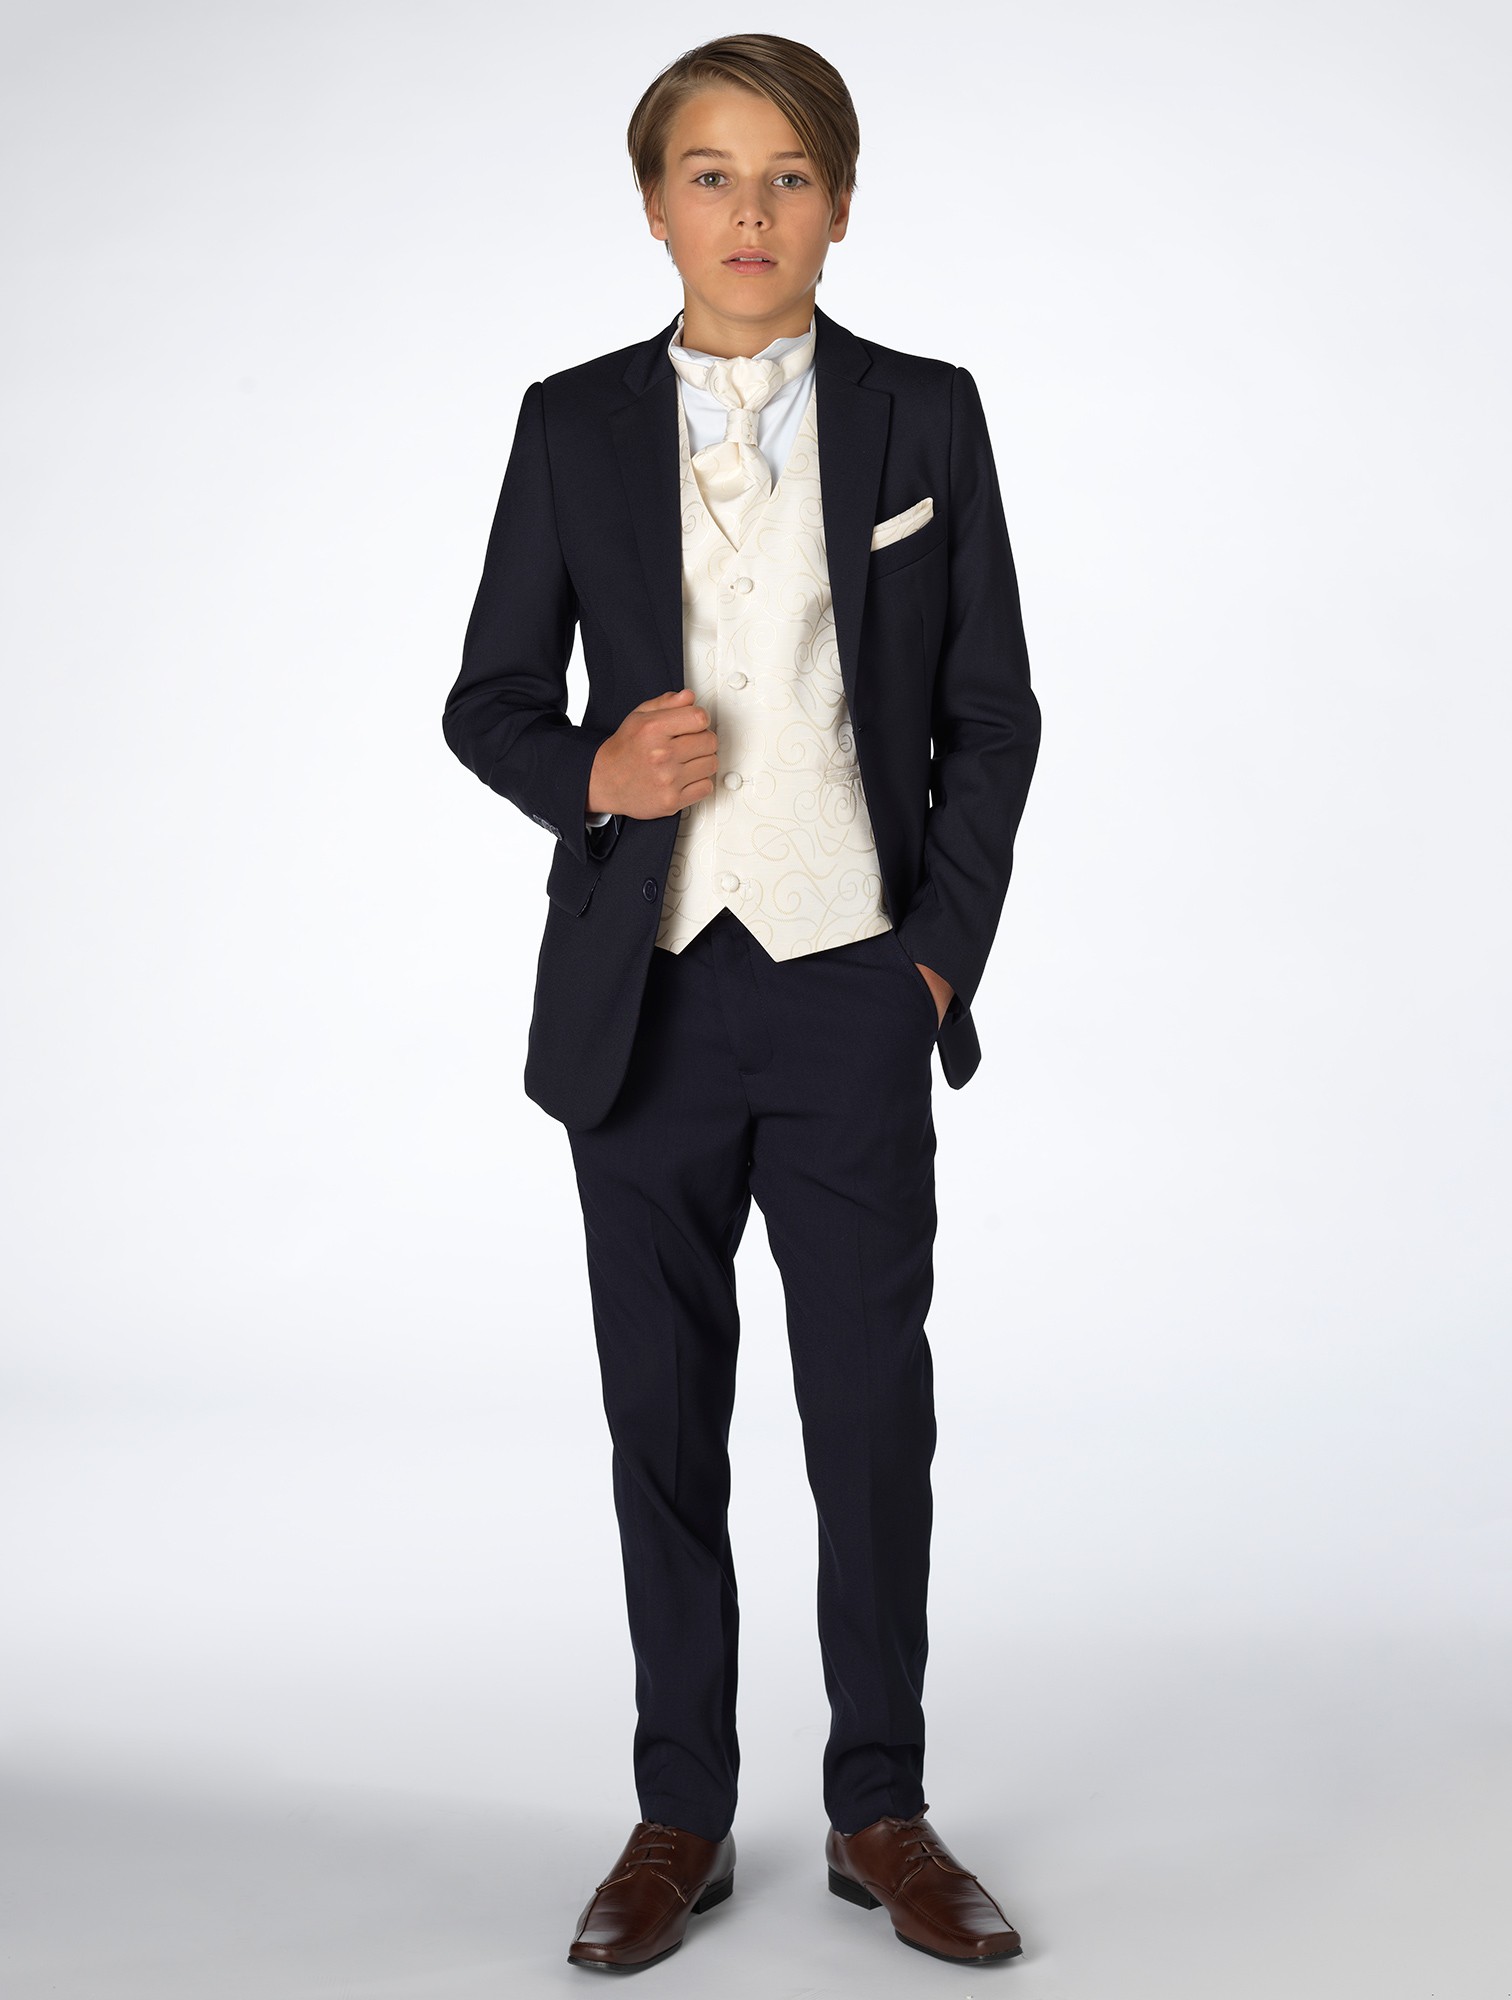 Chlapecký oblek Liam 5-ti dílný tmavě modrý s vestou ivory